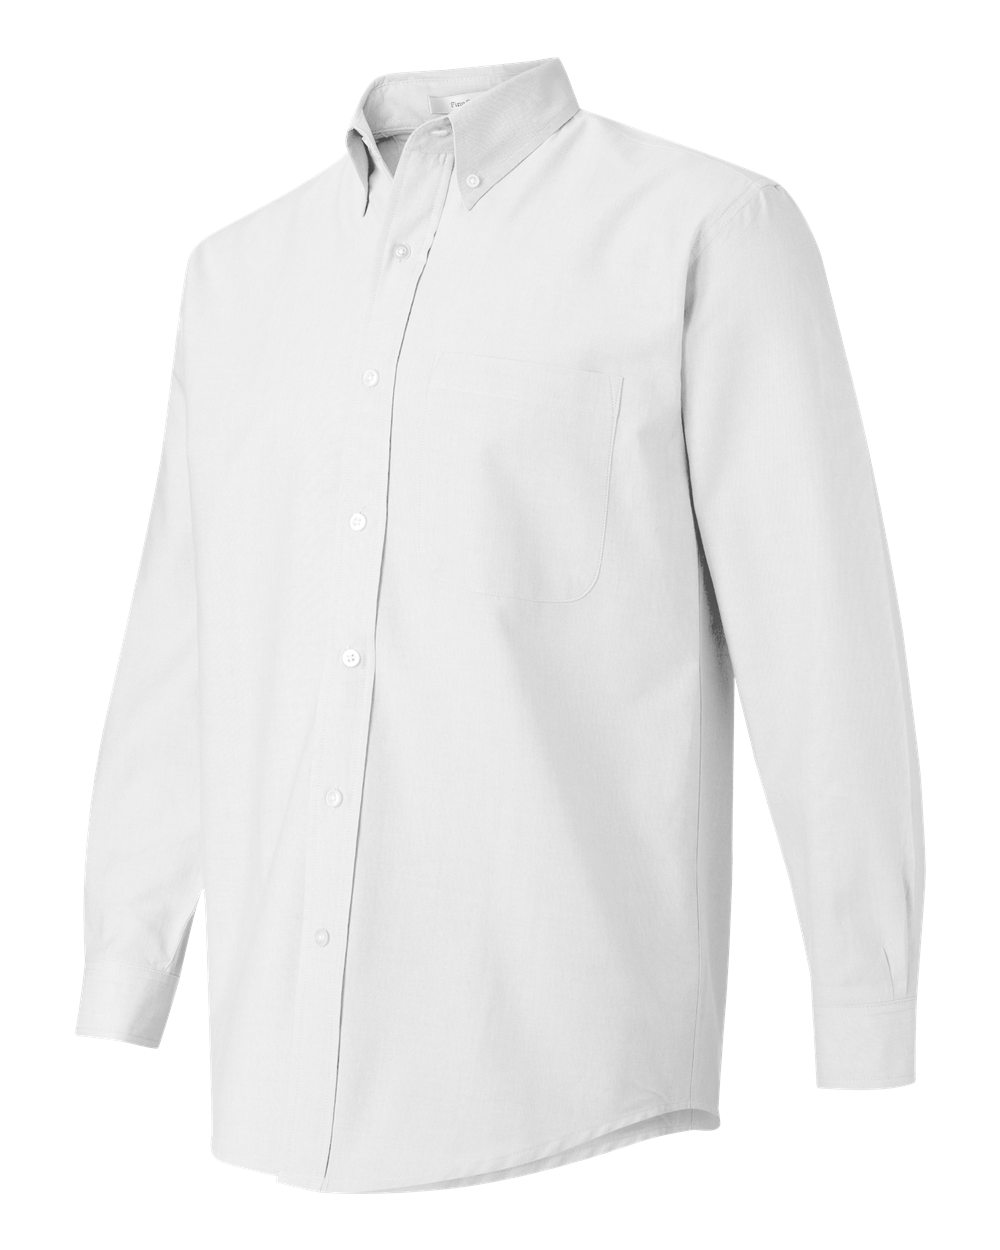 Long Sleeve Oxford Shirt Tall Sizes - 7231-ELA